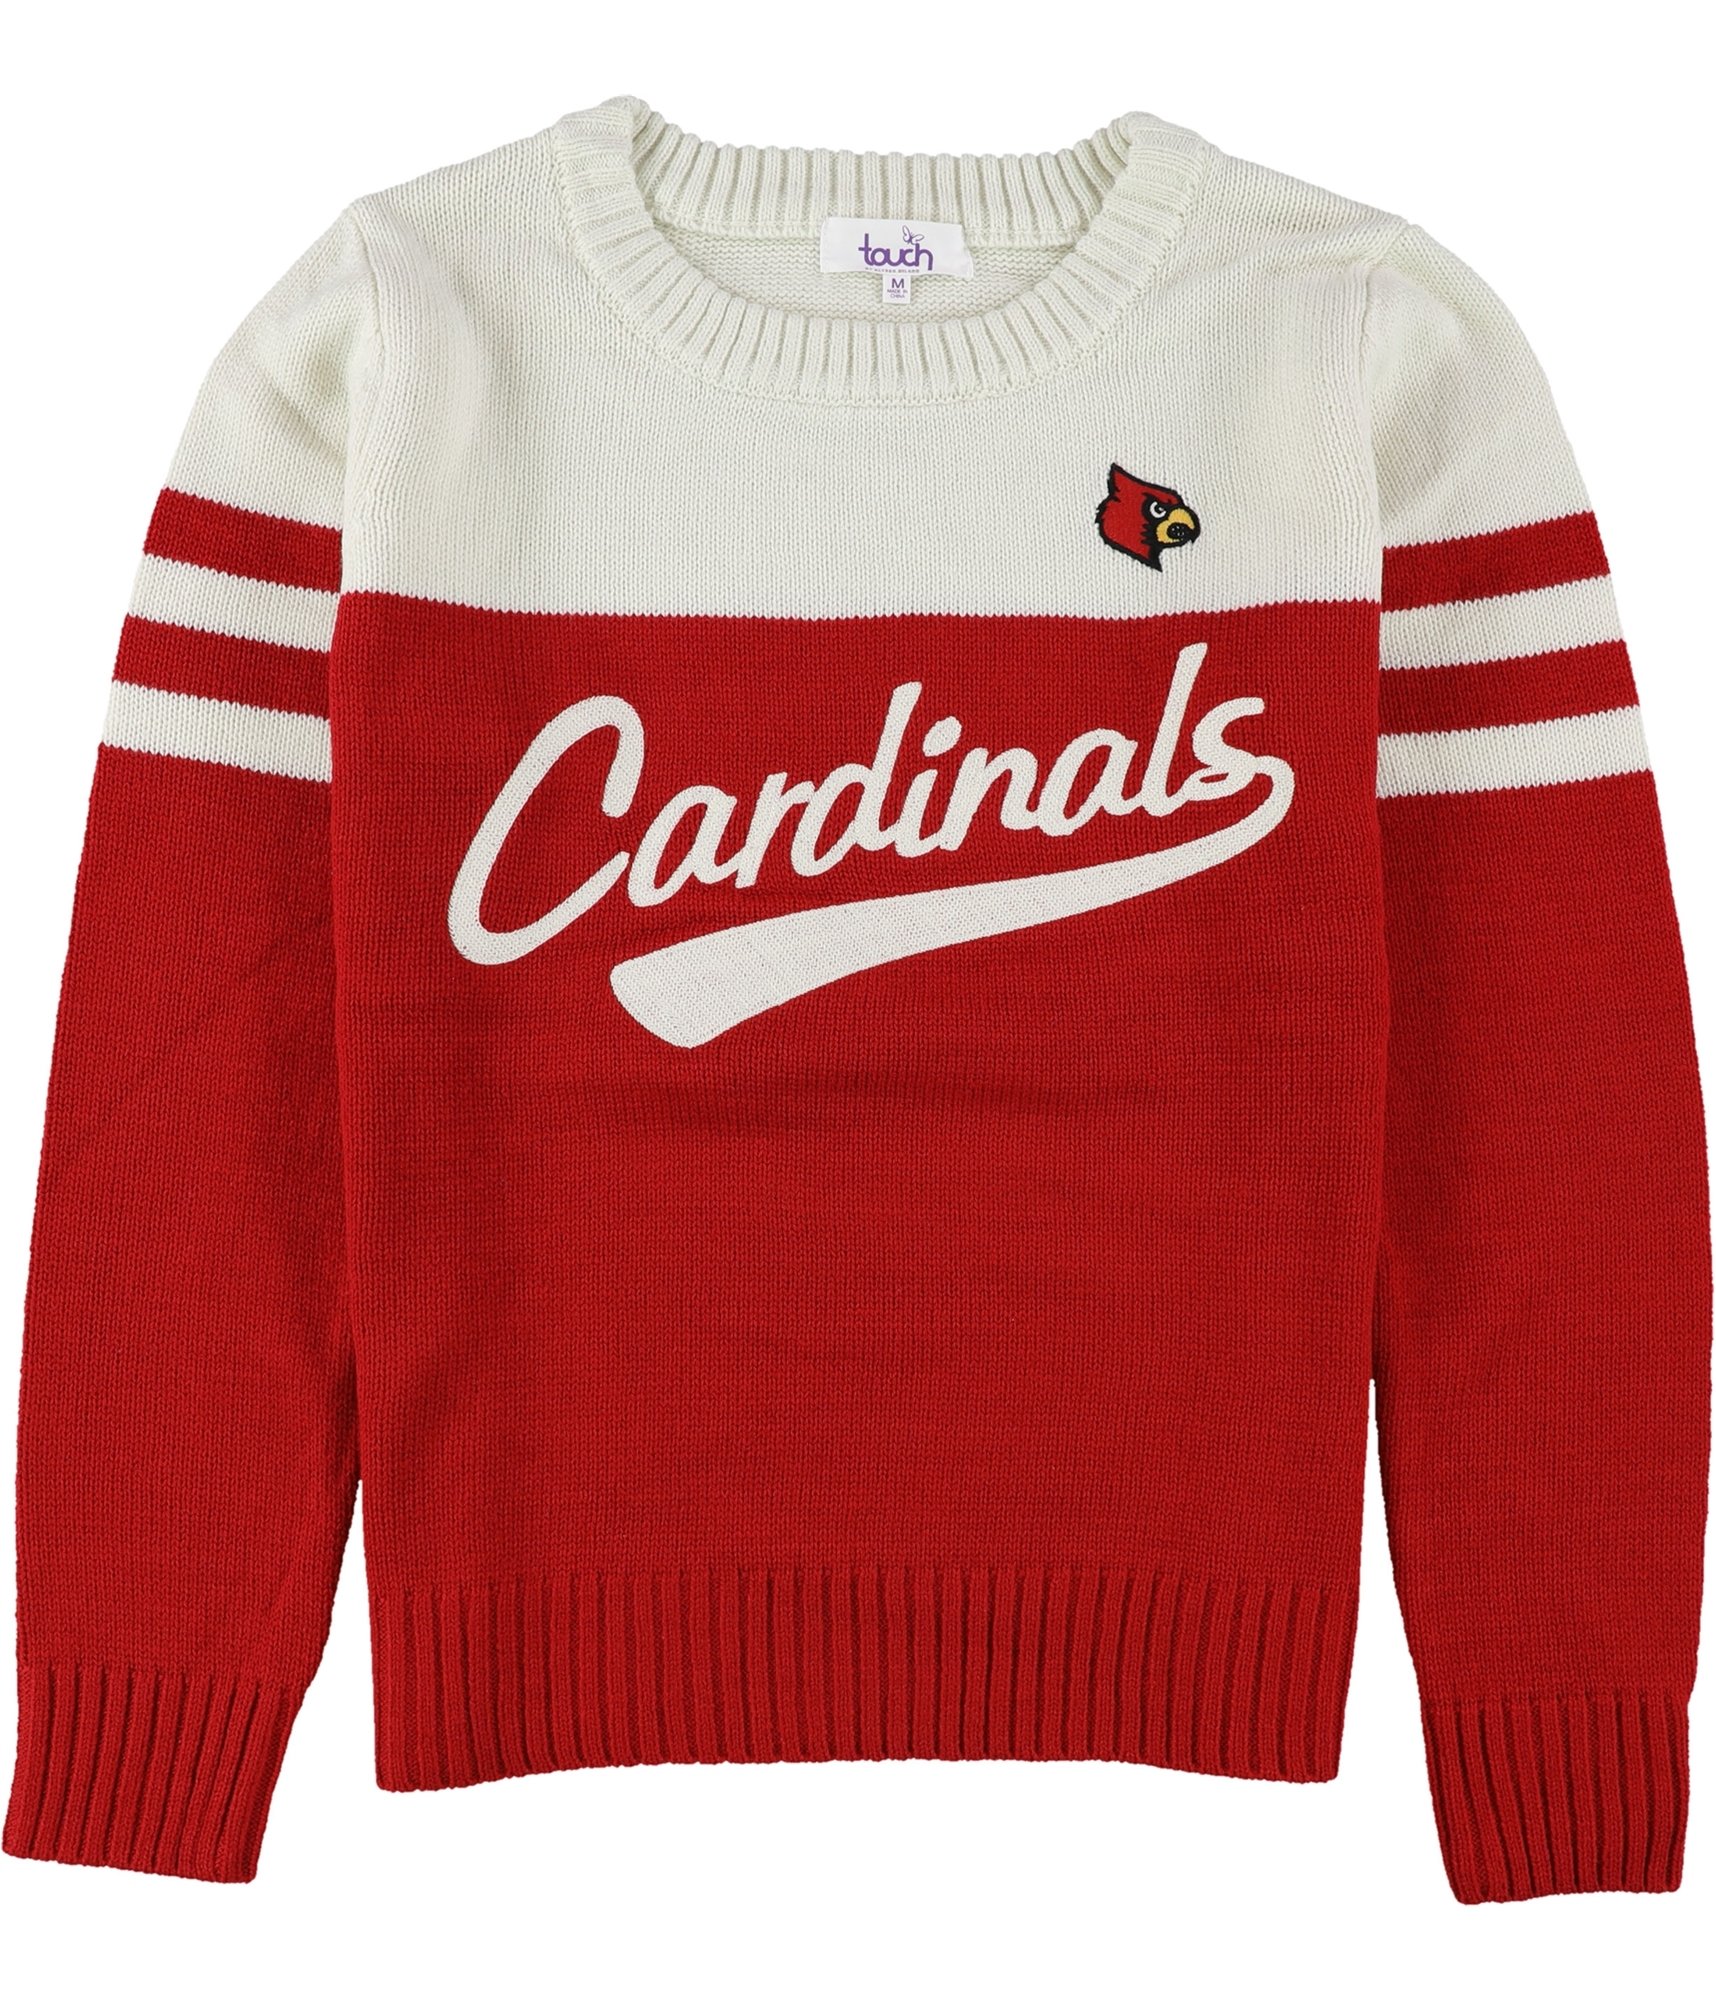 Touch Womens Univ Of Louisville Cardinals Knit Sweater